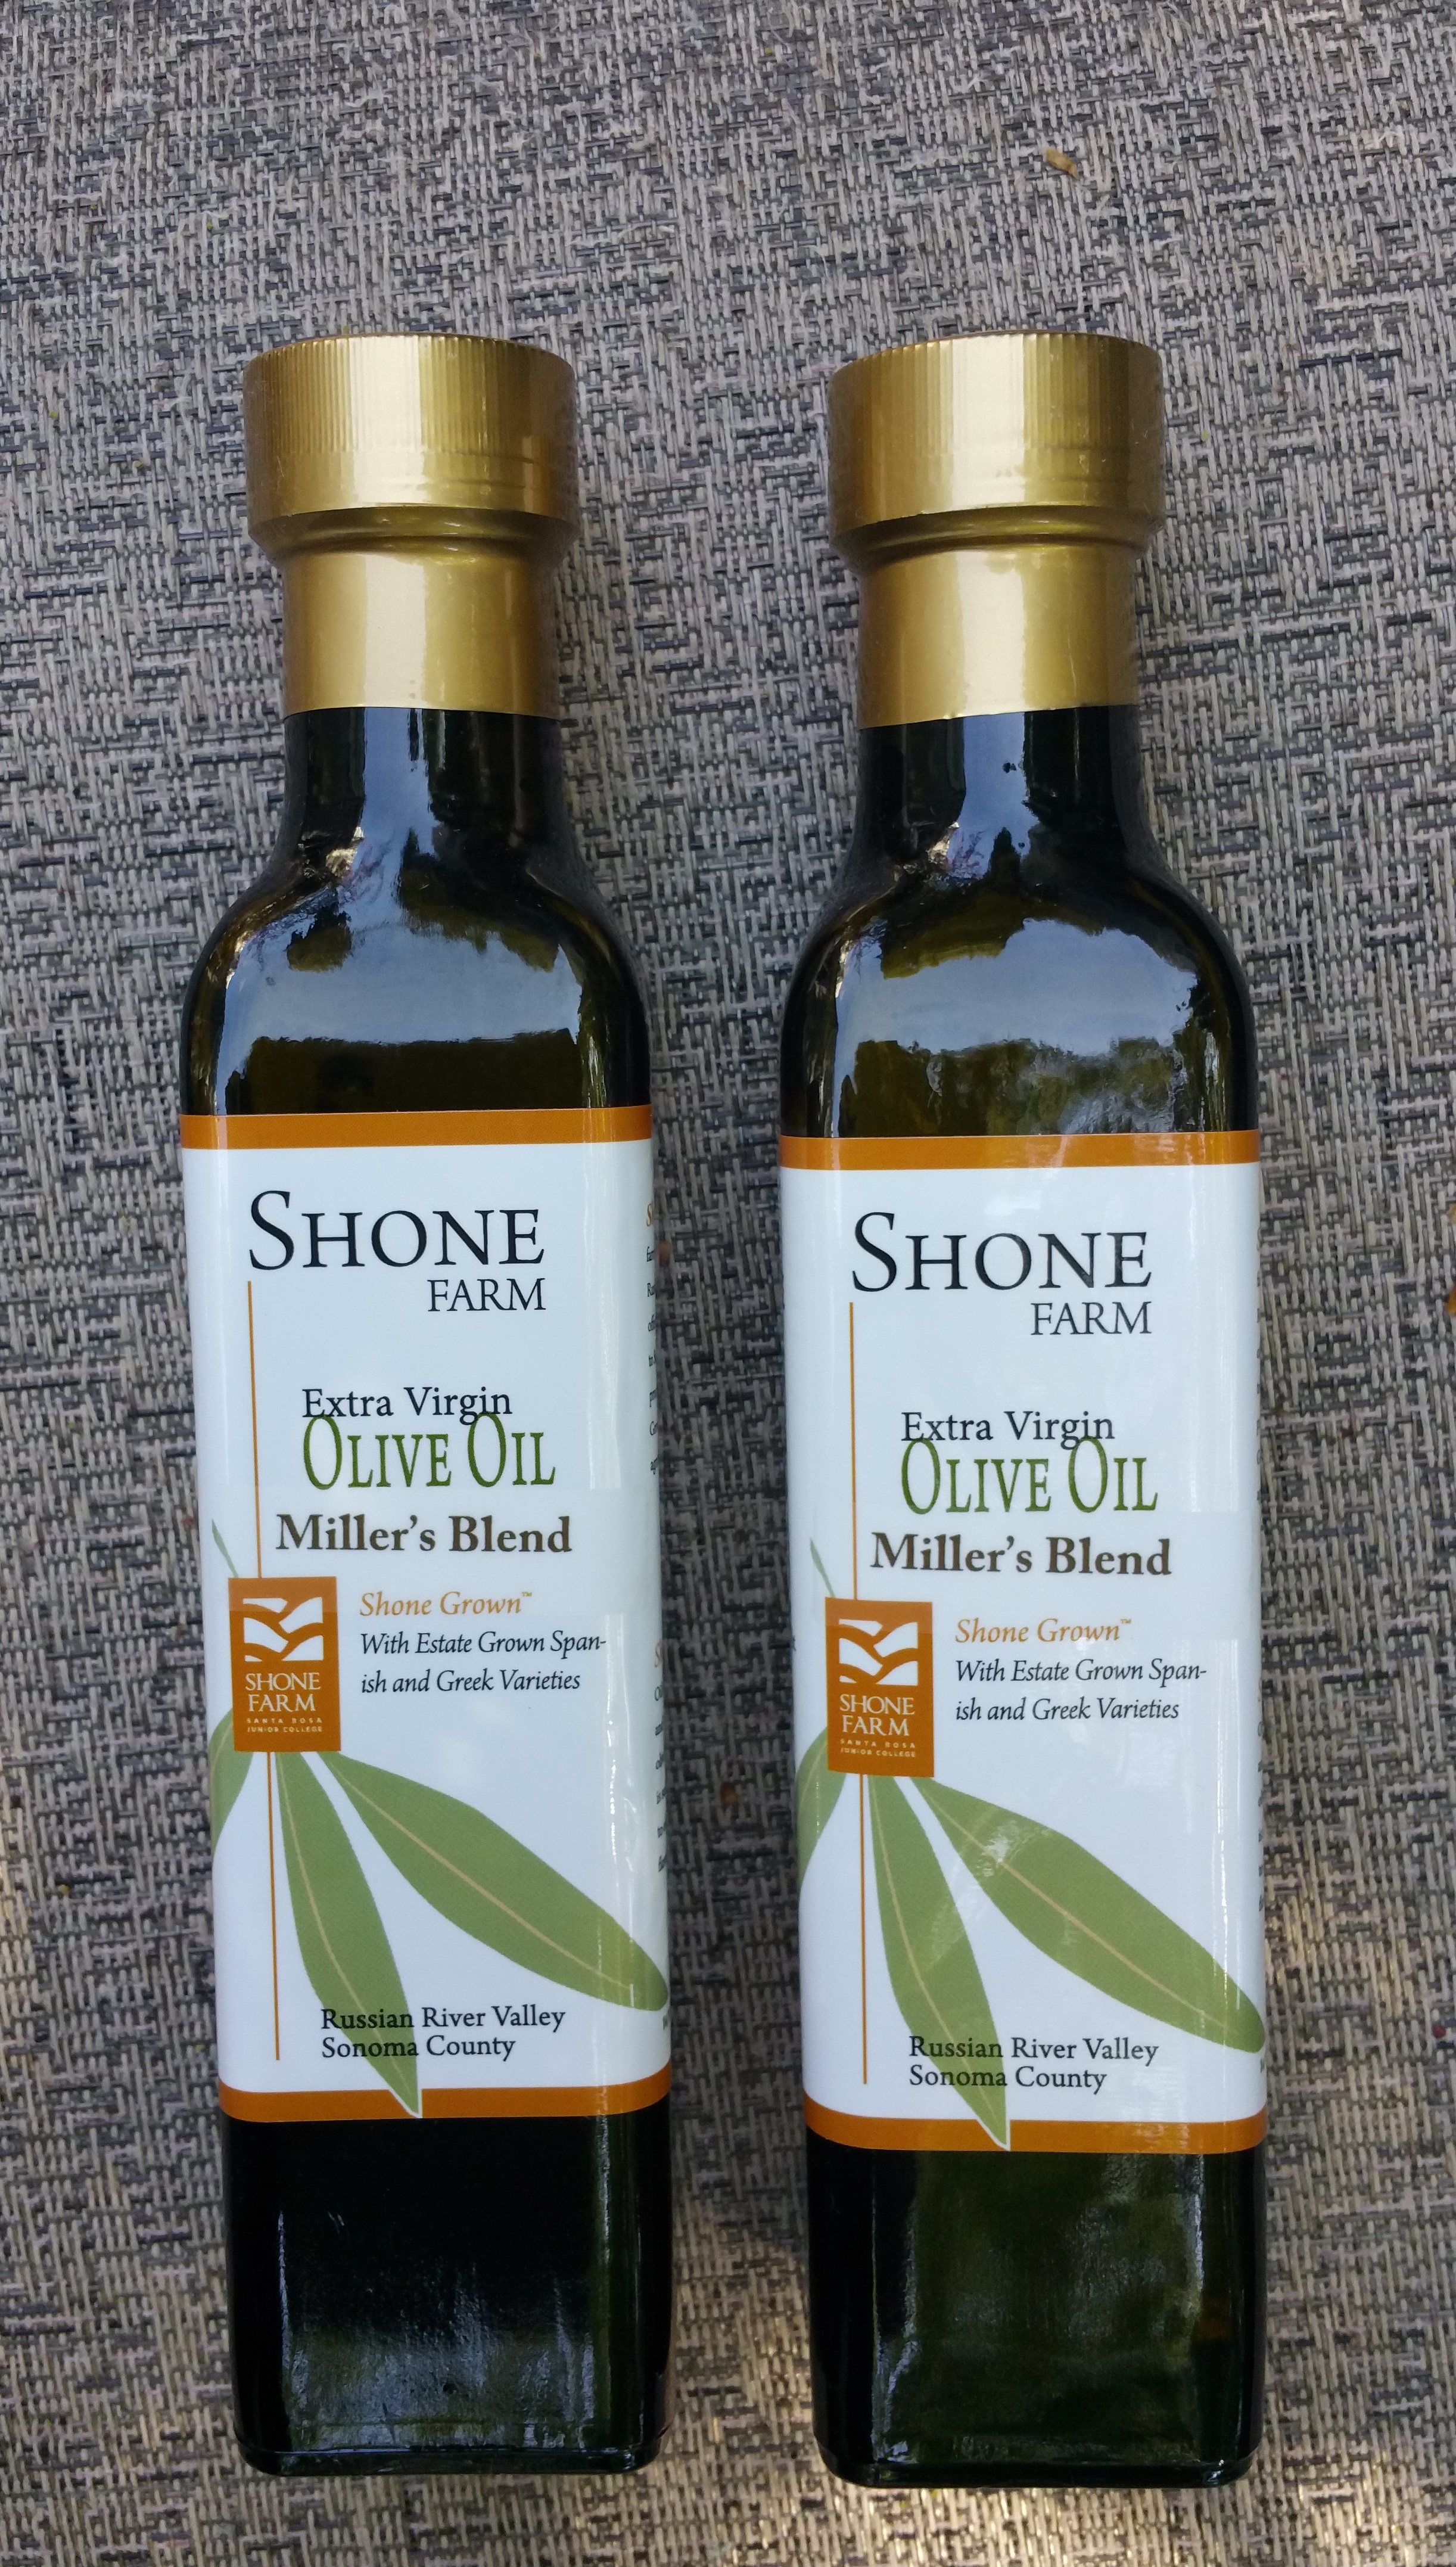 http://asfccc.com/wp-content/uploads/2015/04/Shone-Farm-Olive-Oil-SRJC.jpg